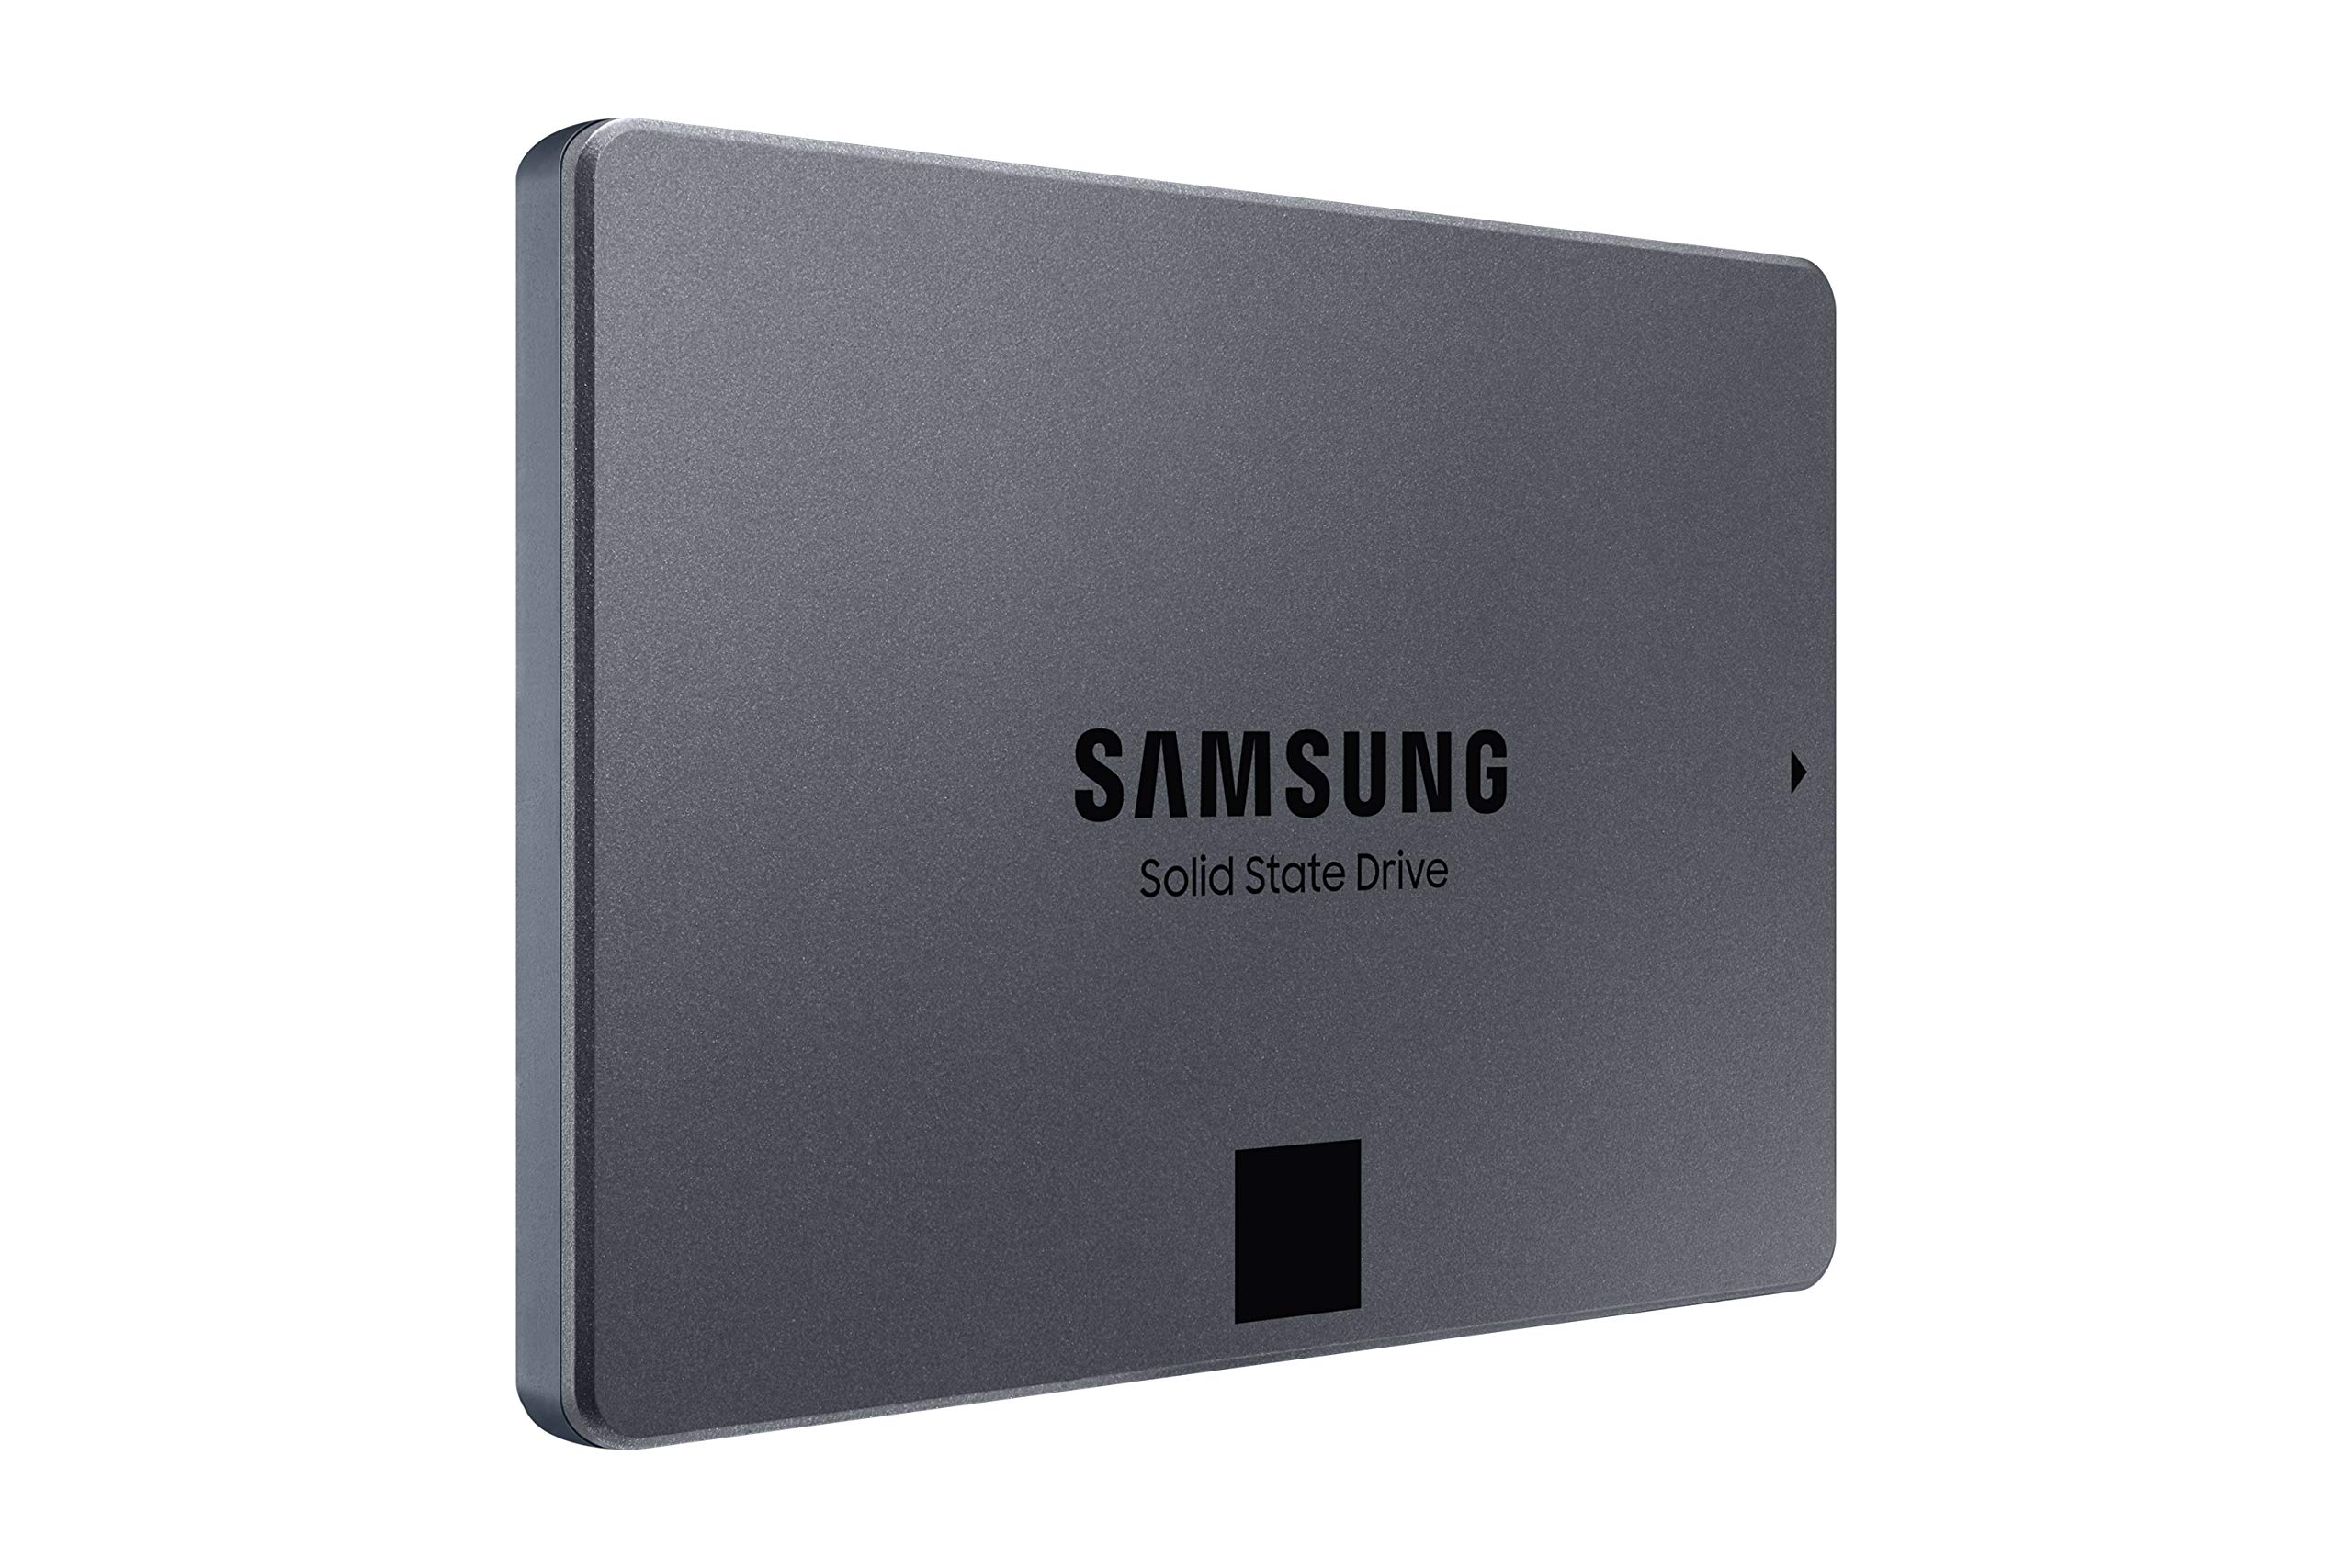 SAMSUNG 870 QVO 4TB Internal SATA SSD 6.35 cm (2.5 Inch) SATA 6 Gb/s Retail MZ-77Q4T0BW